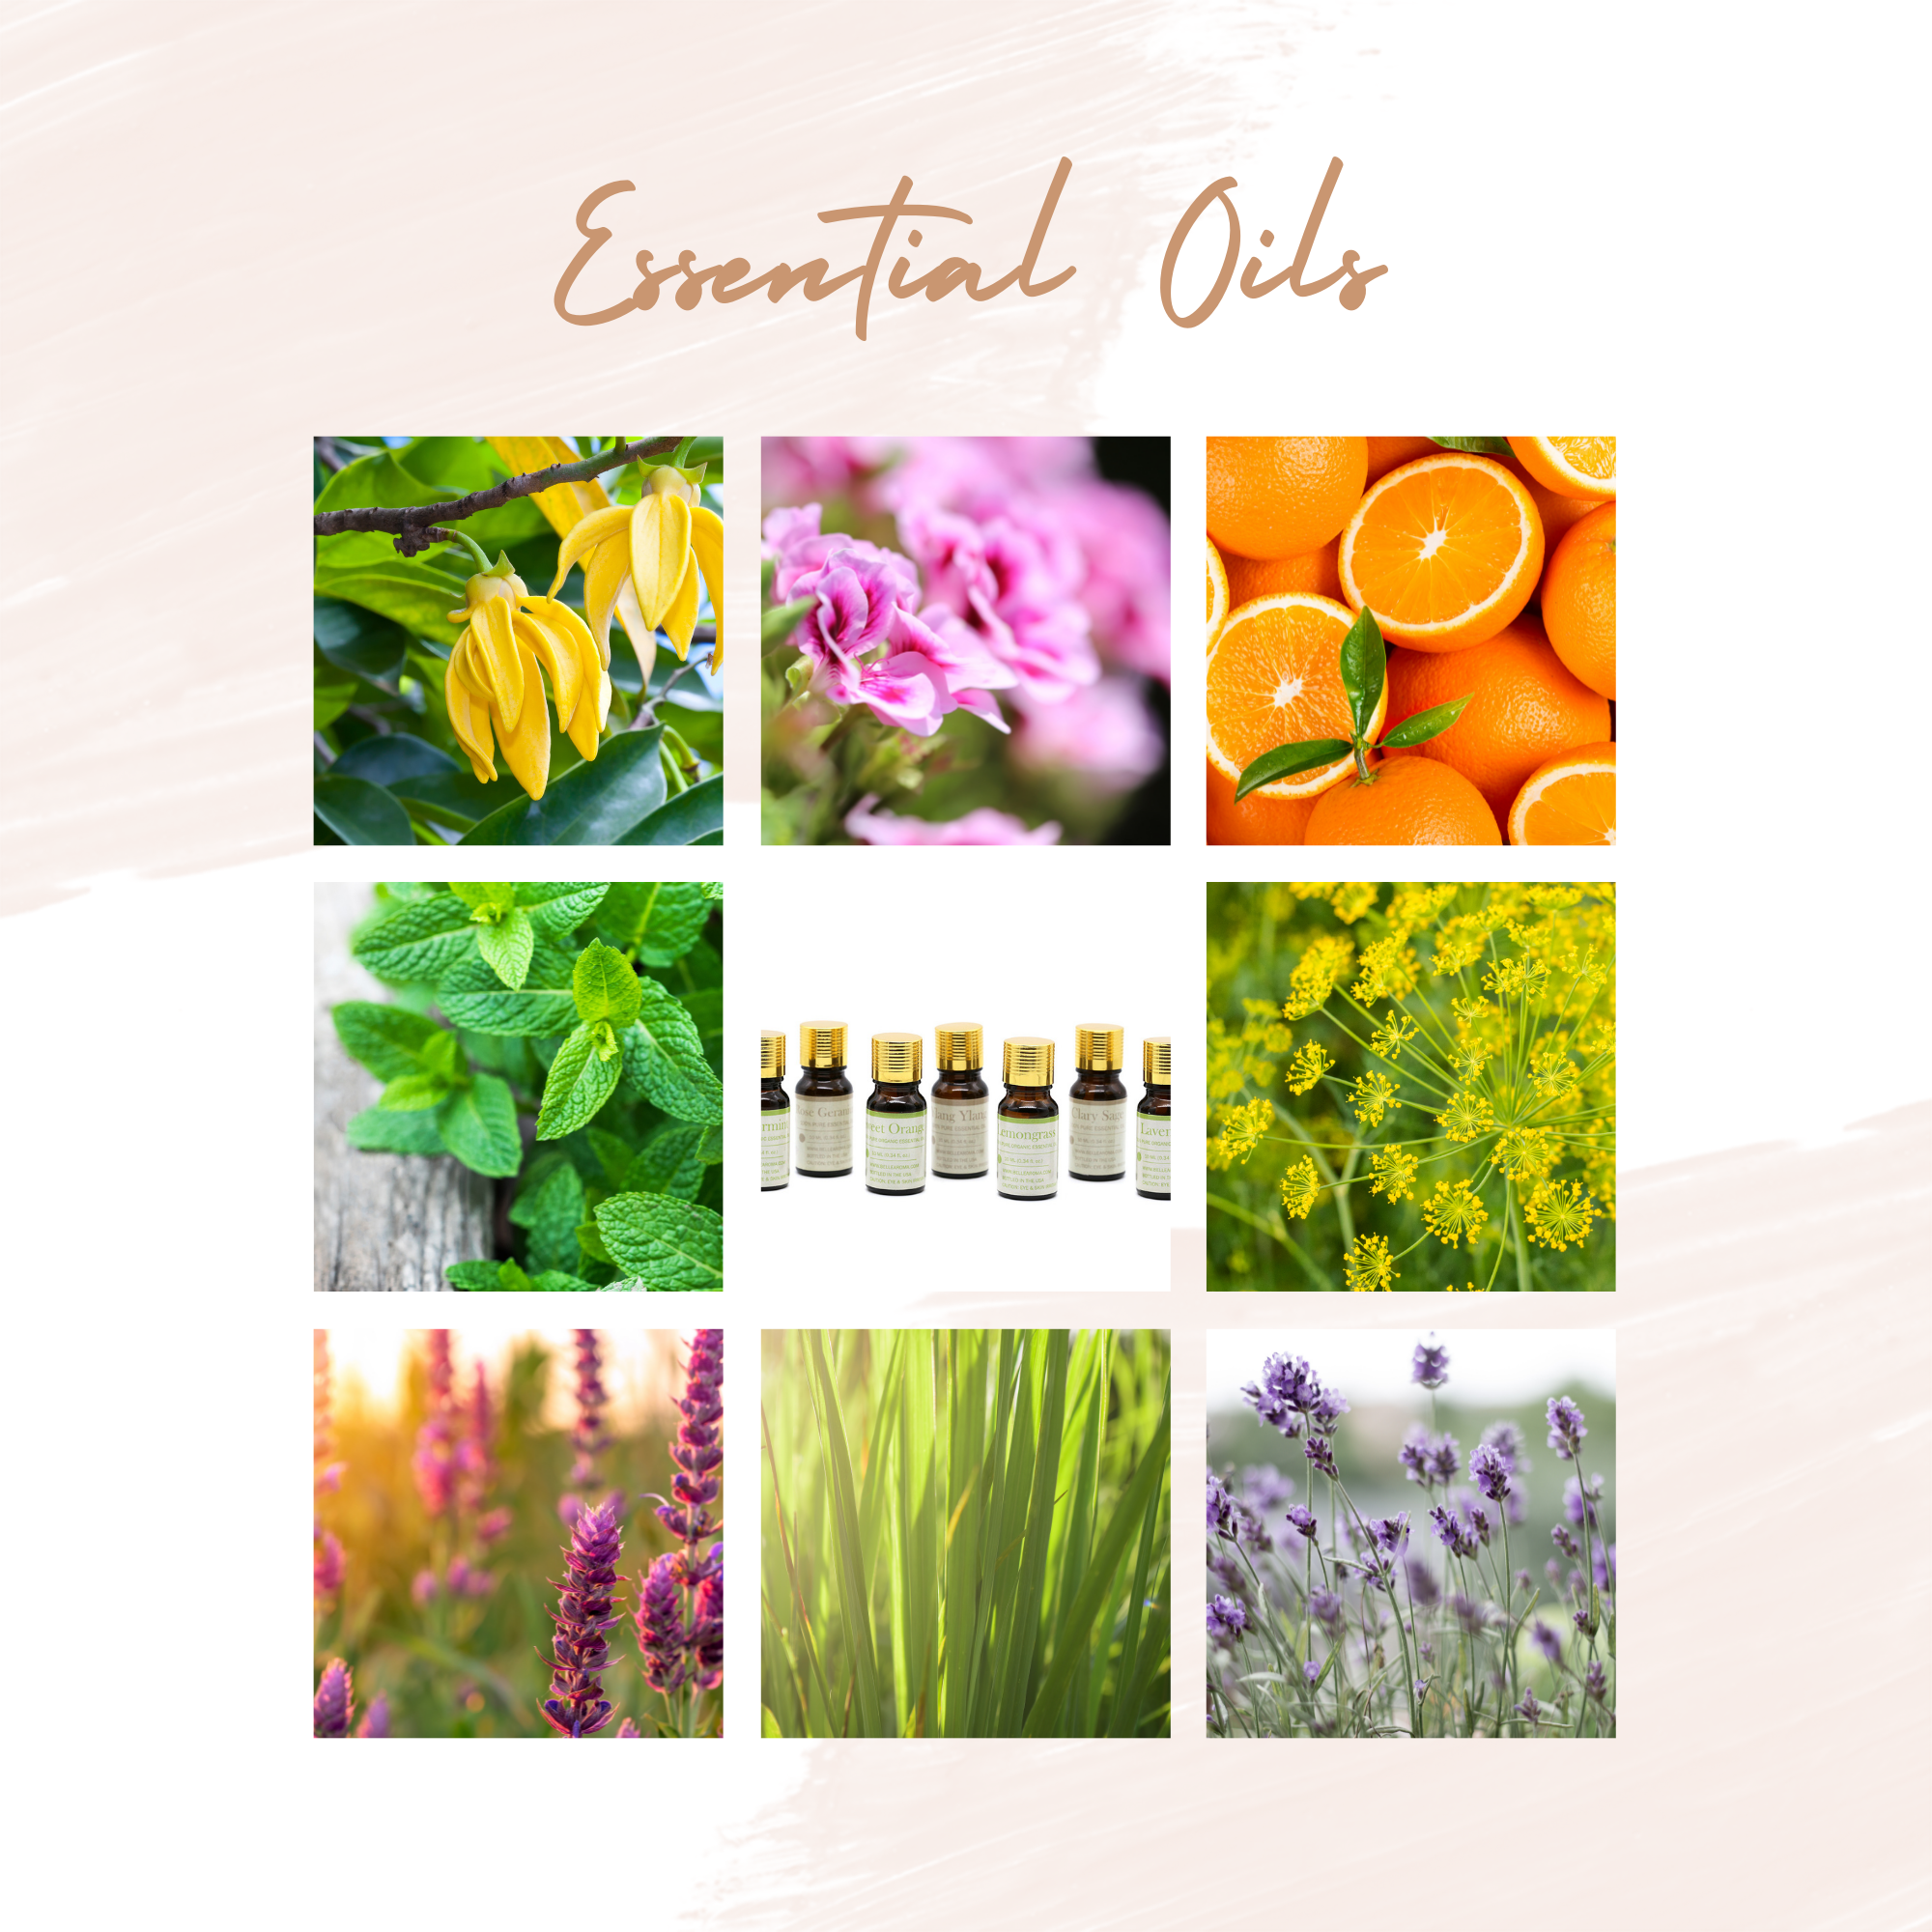 Organic Fennel - Belle Aroma® 10ML Organic Essential Oil  essential oil